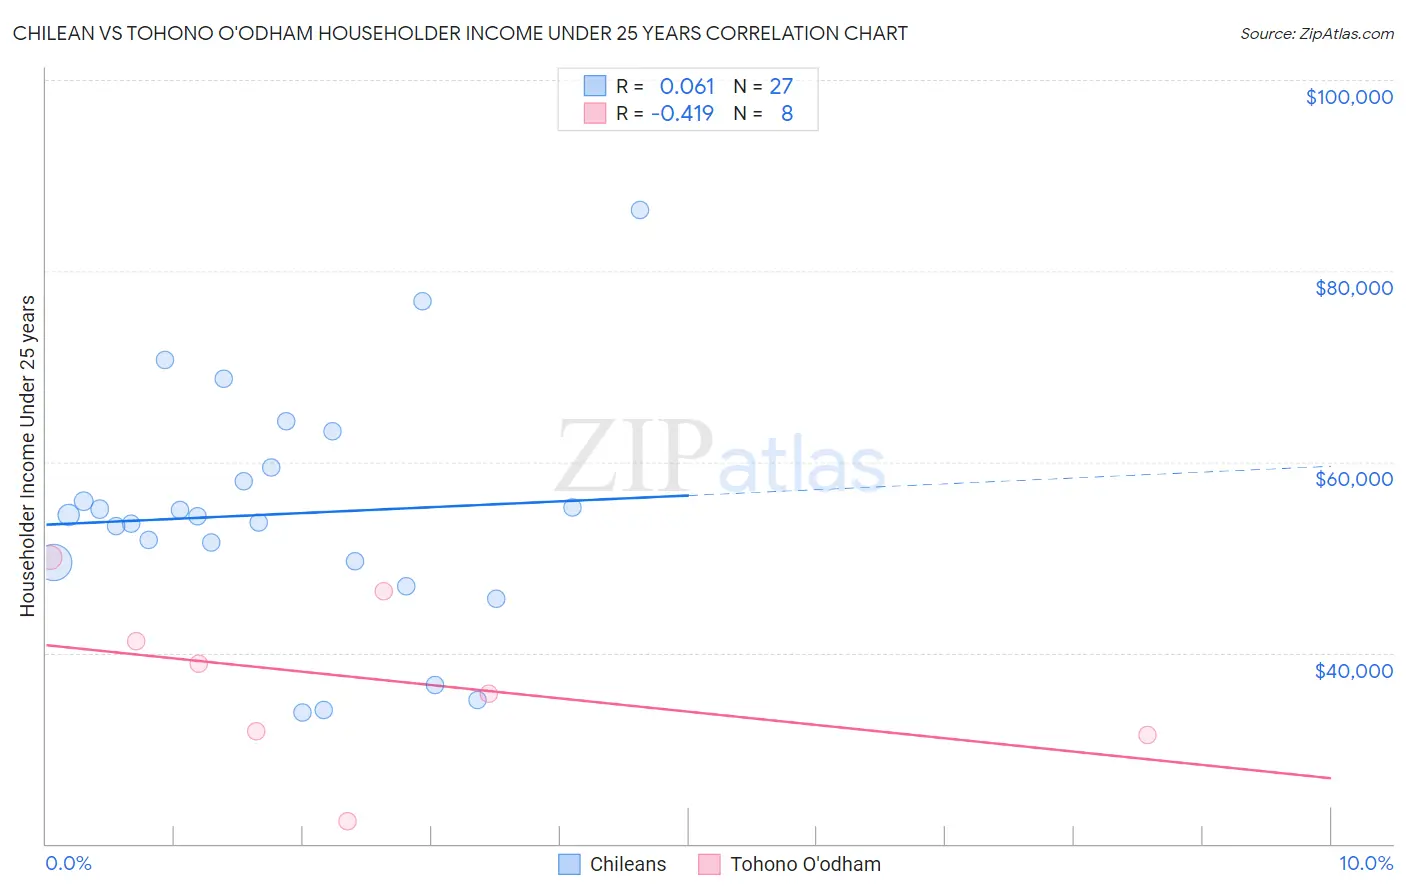 Chilean vs Tohono O'odham Householder Income Under 25 years